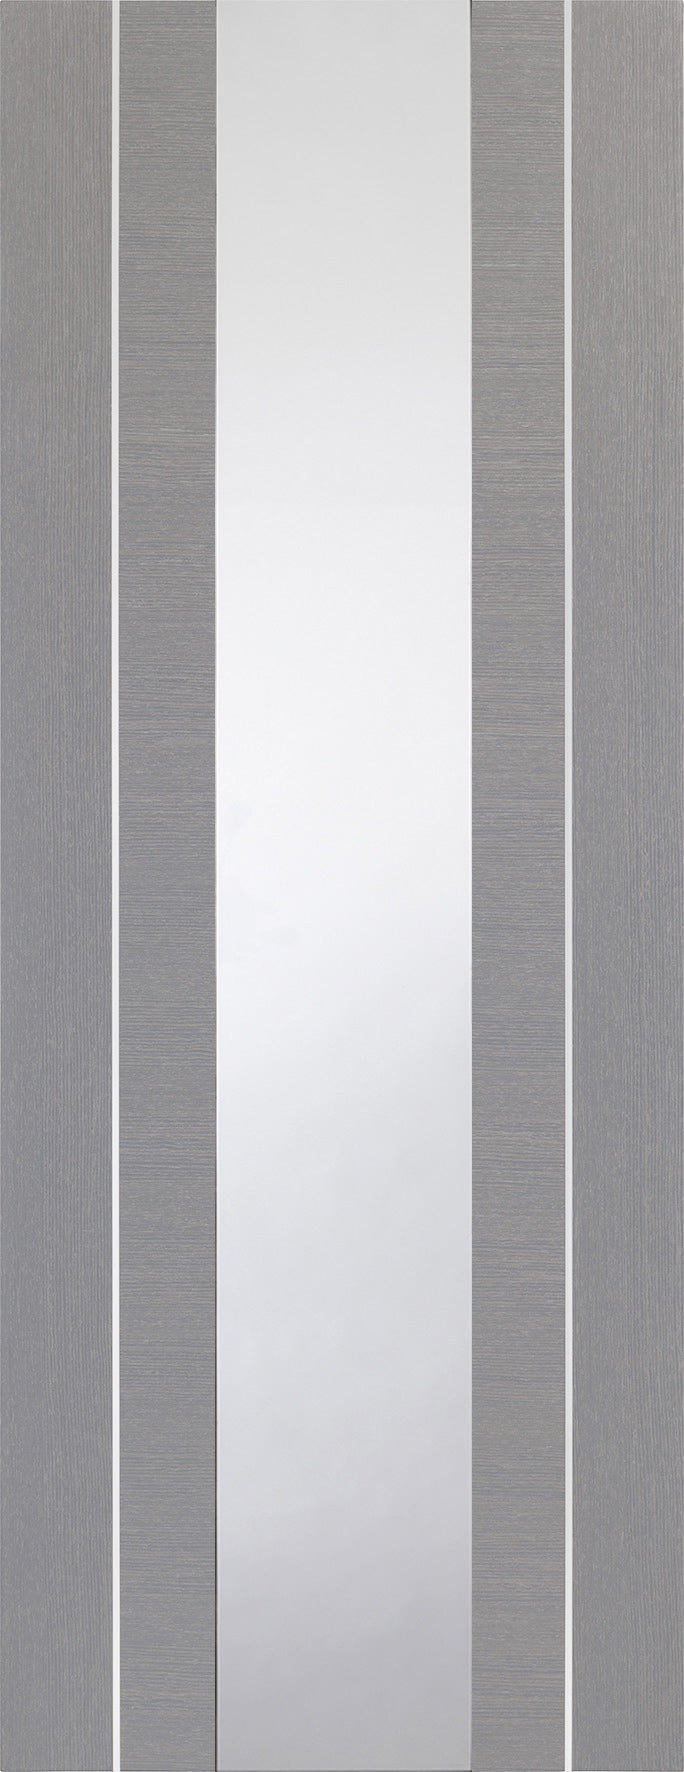 Forli light grey door with aluminium inlays and clear glass..  